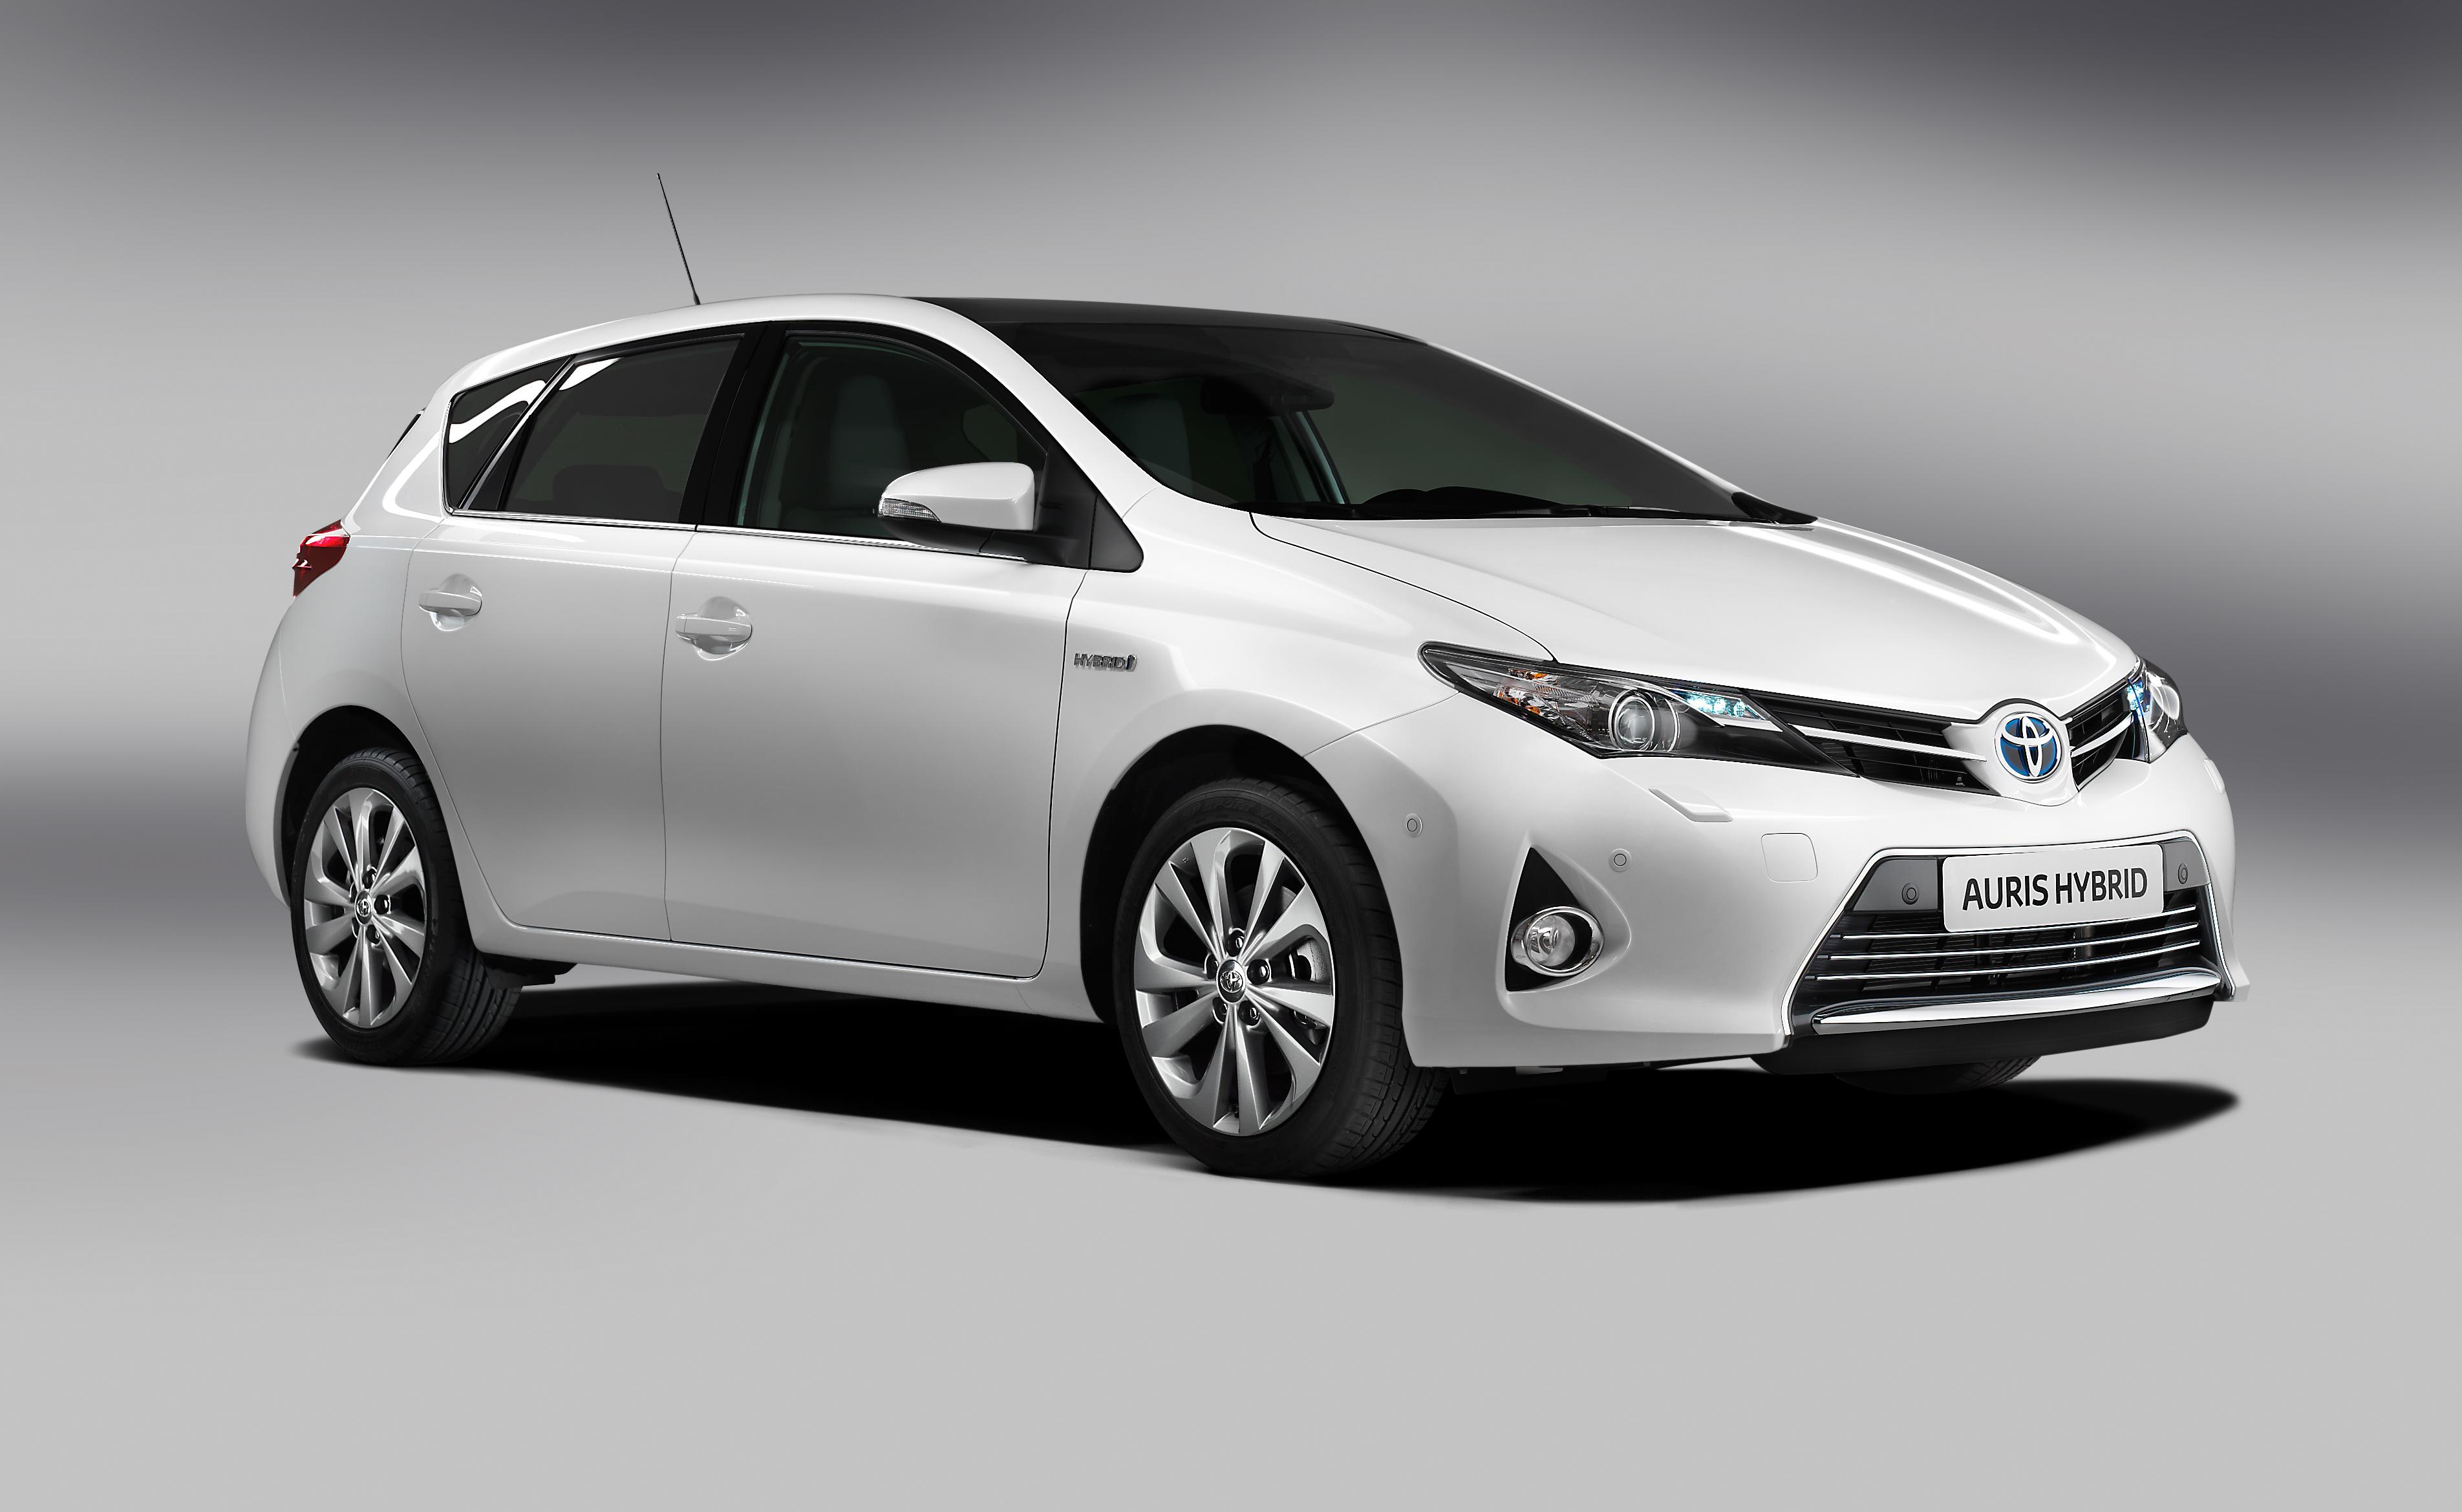 2013 Toyota Auris Hybrid to debut in Paris